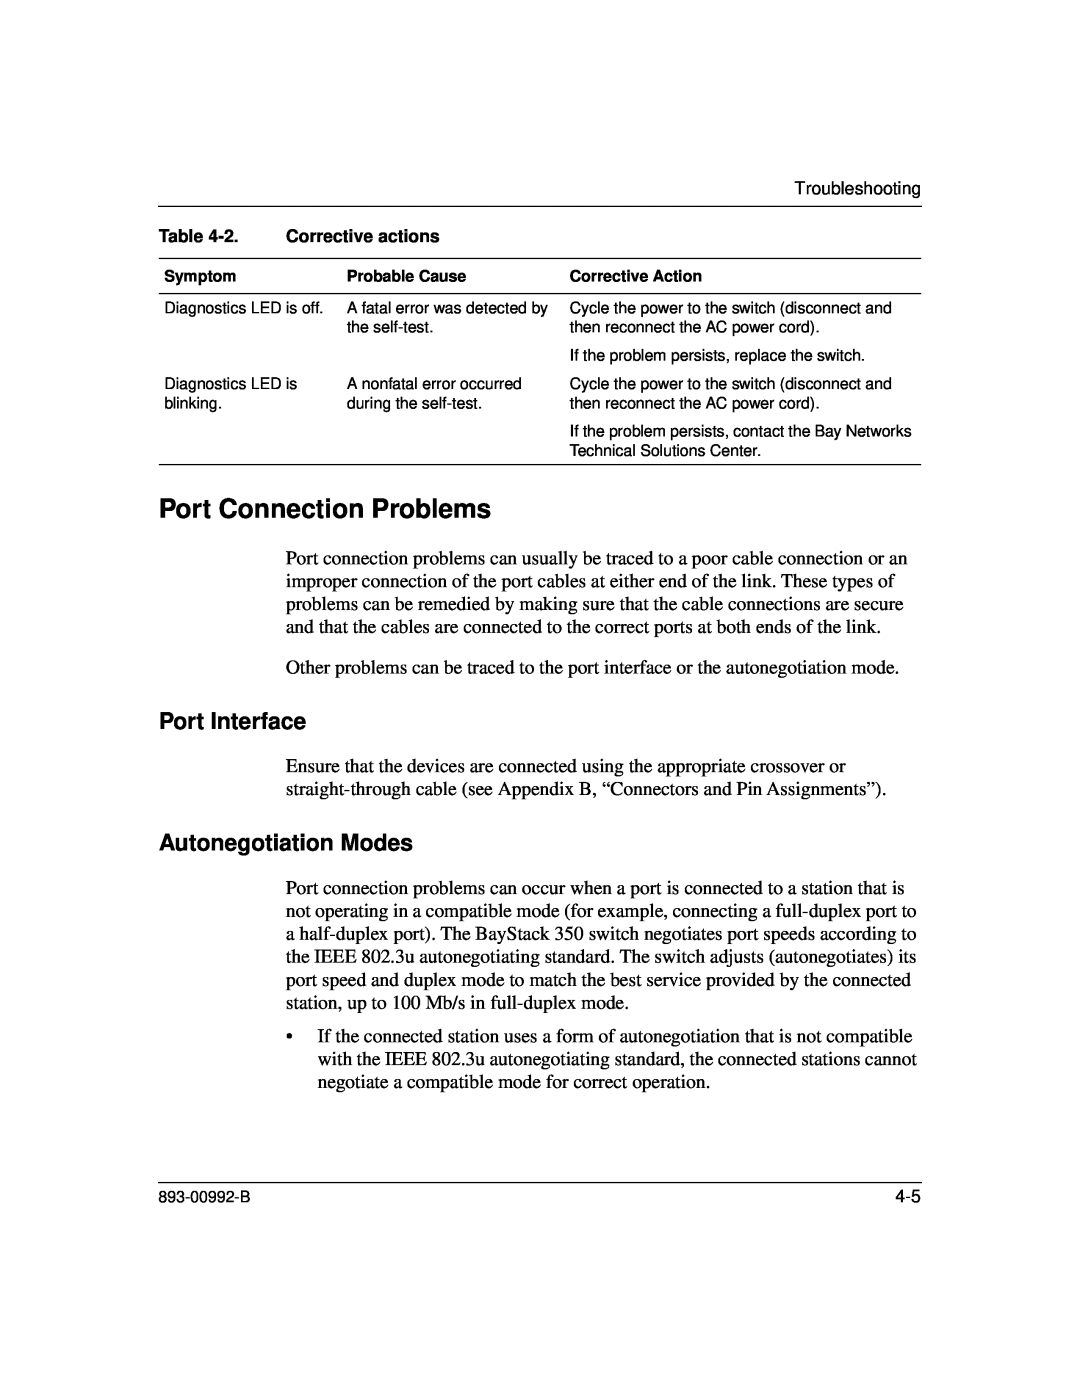 Bay Technical Associates 350 manual Port Connection Problems, Port Interface, Autonegotiation Modes 